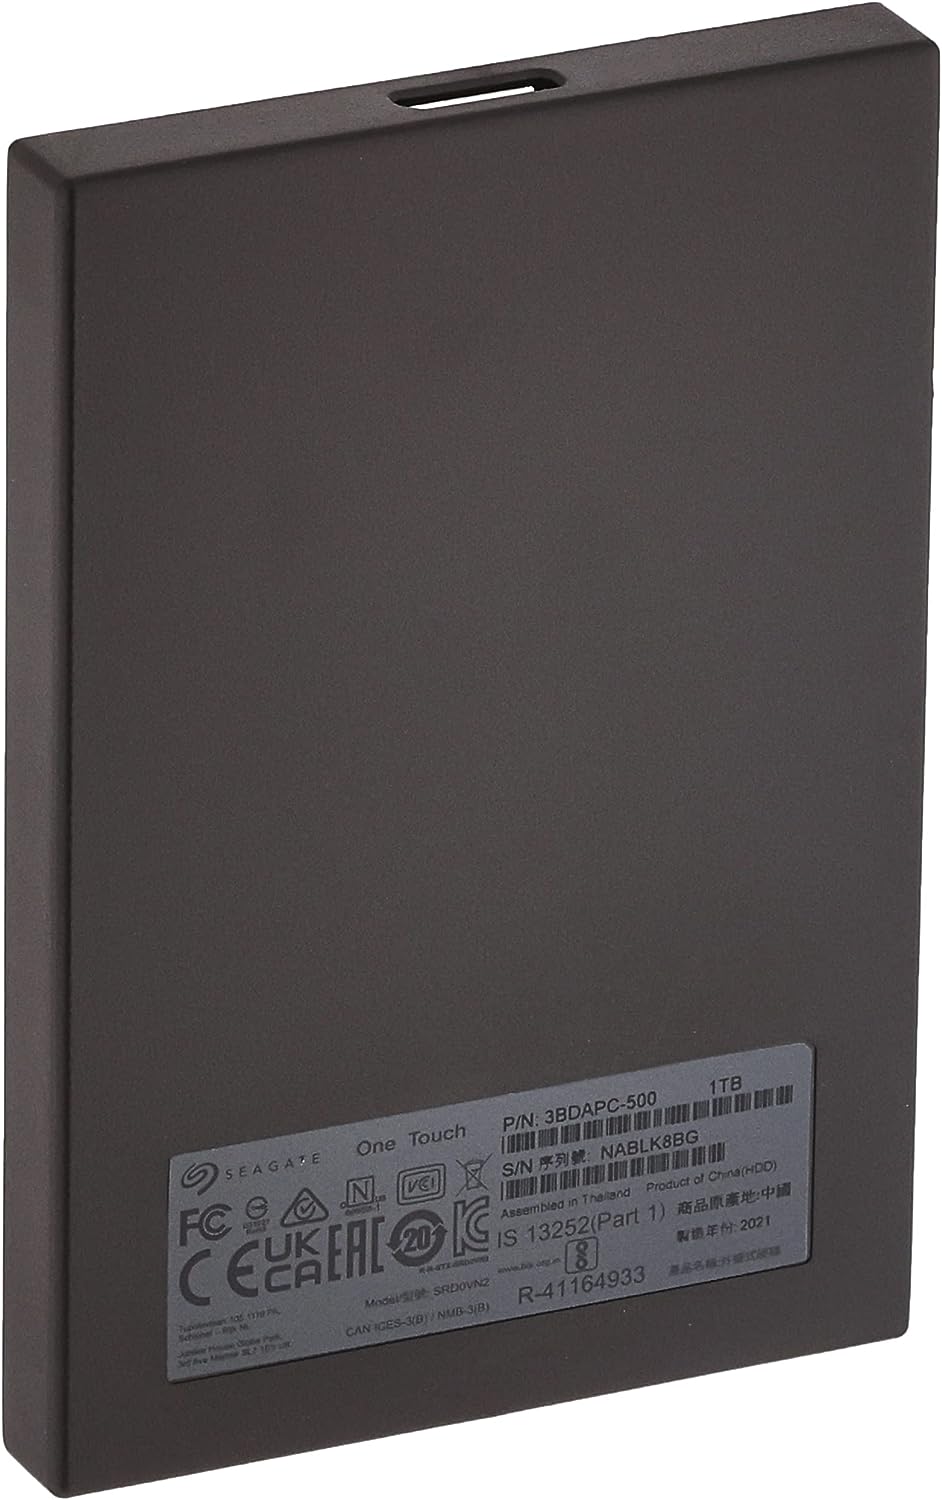 Seagate One Touch External Hard Disk Drive, 1TB, Black - STKB1000400